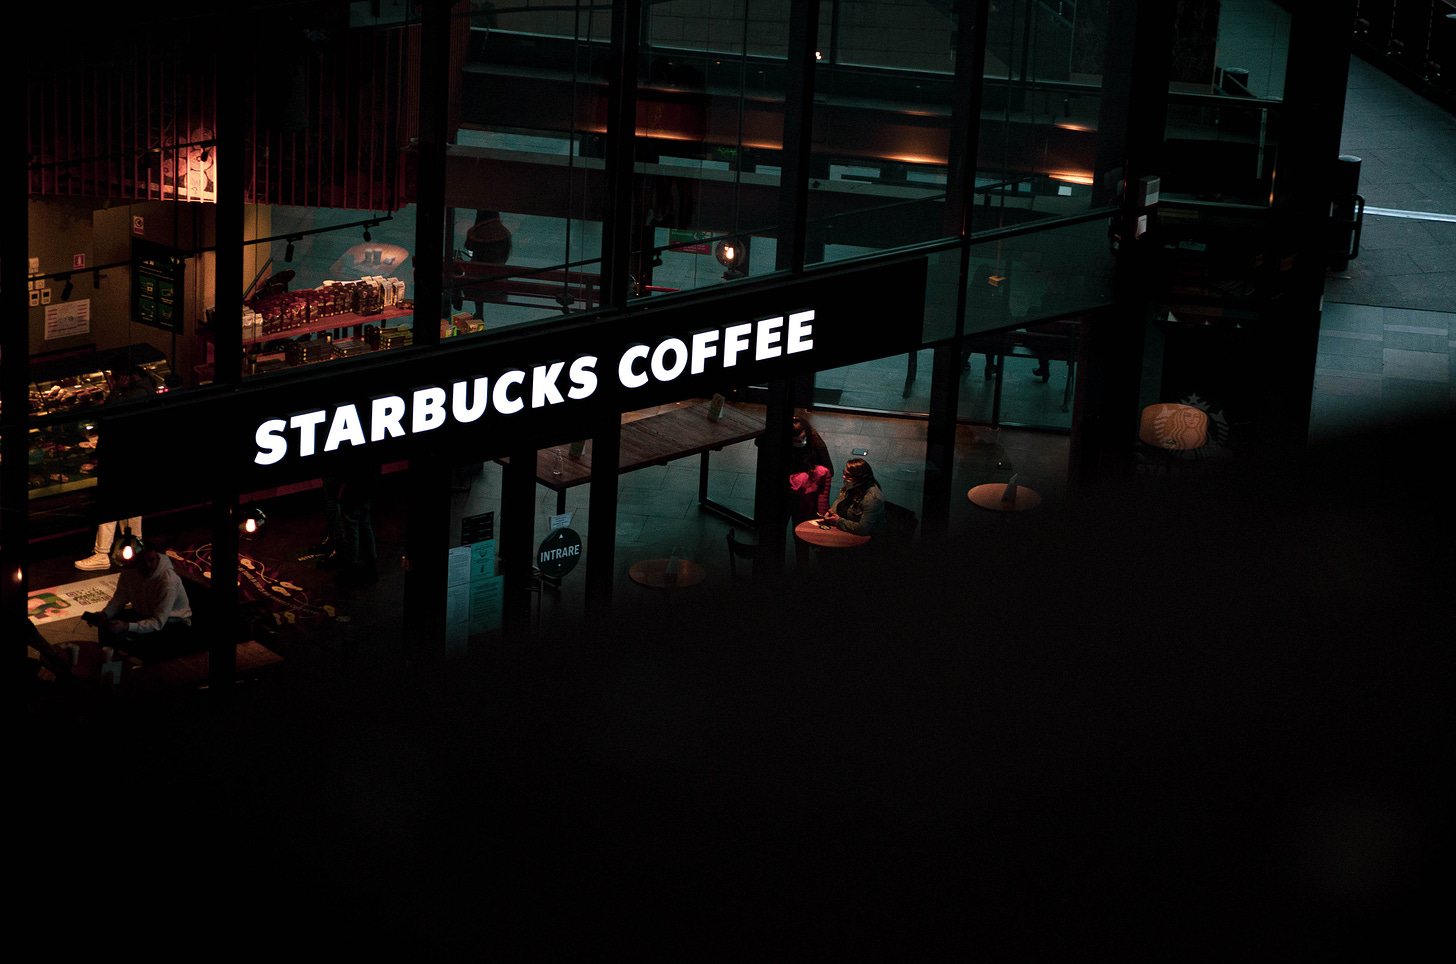 Photo of Starbucks Coffee at night